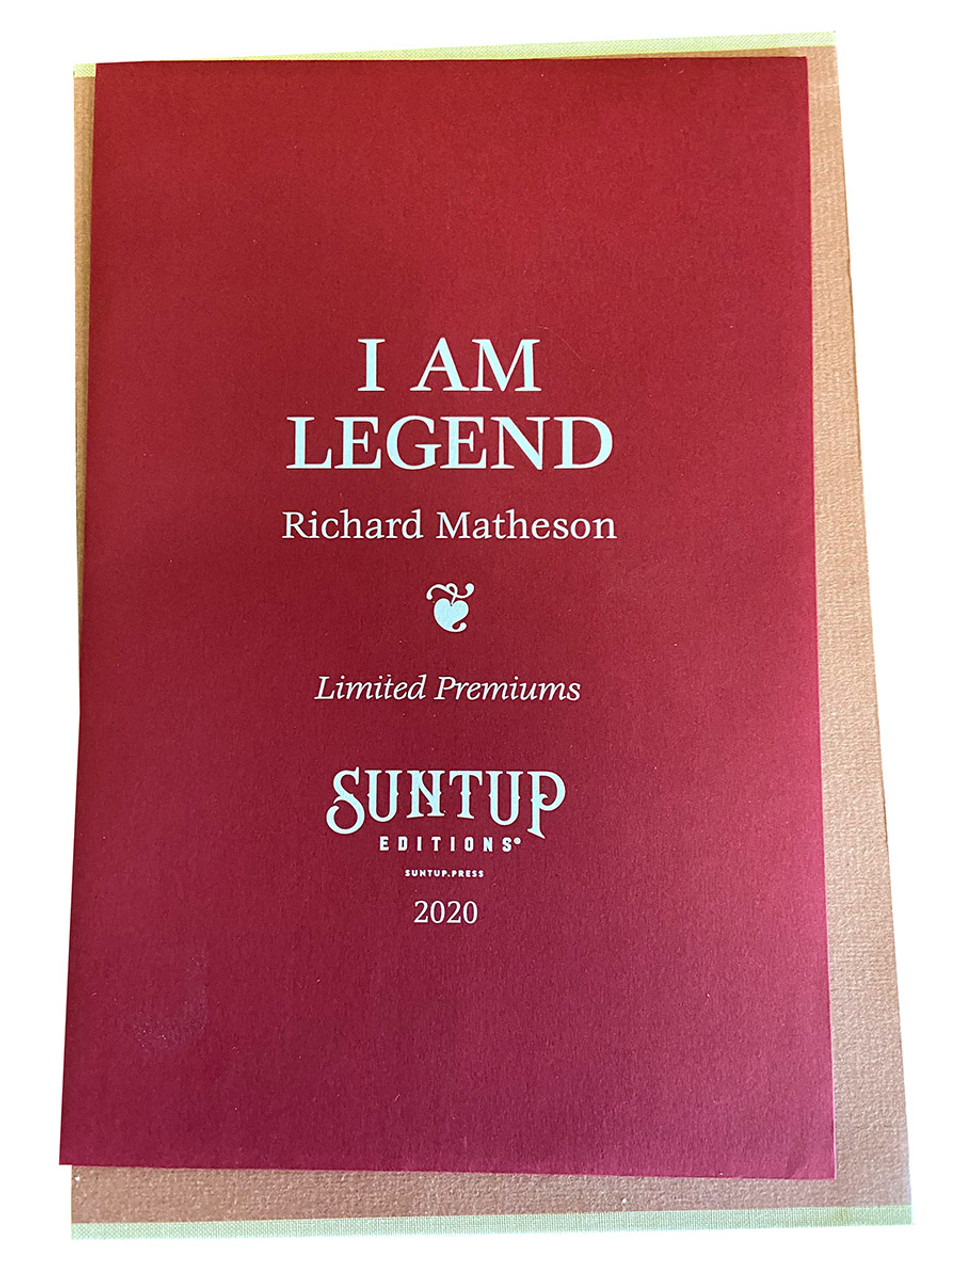 Richard Matheson "I Am Legend" Signed Limited Edition No. 90 of 250 , Slipcased [Very Fine]